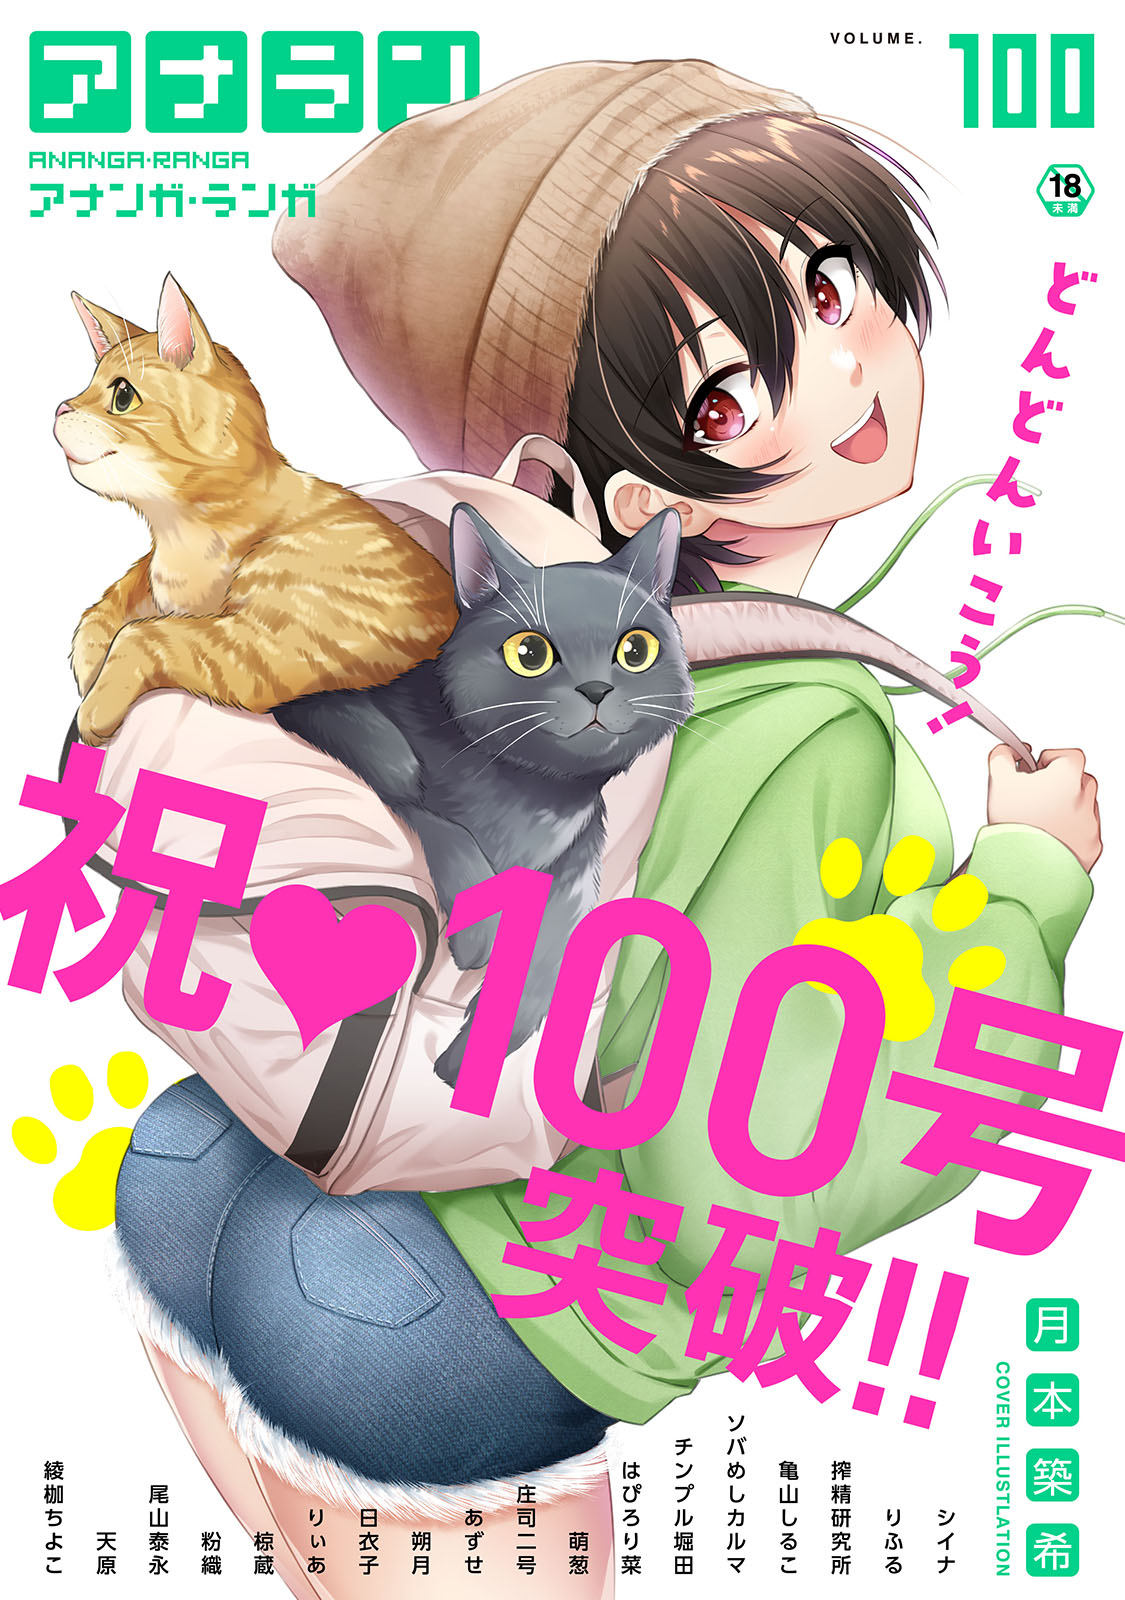  Vol. 100(23/10/07発売)